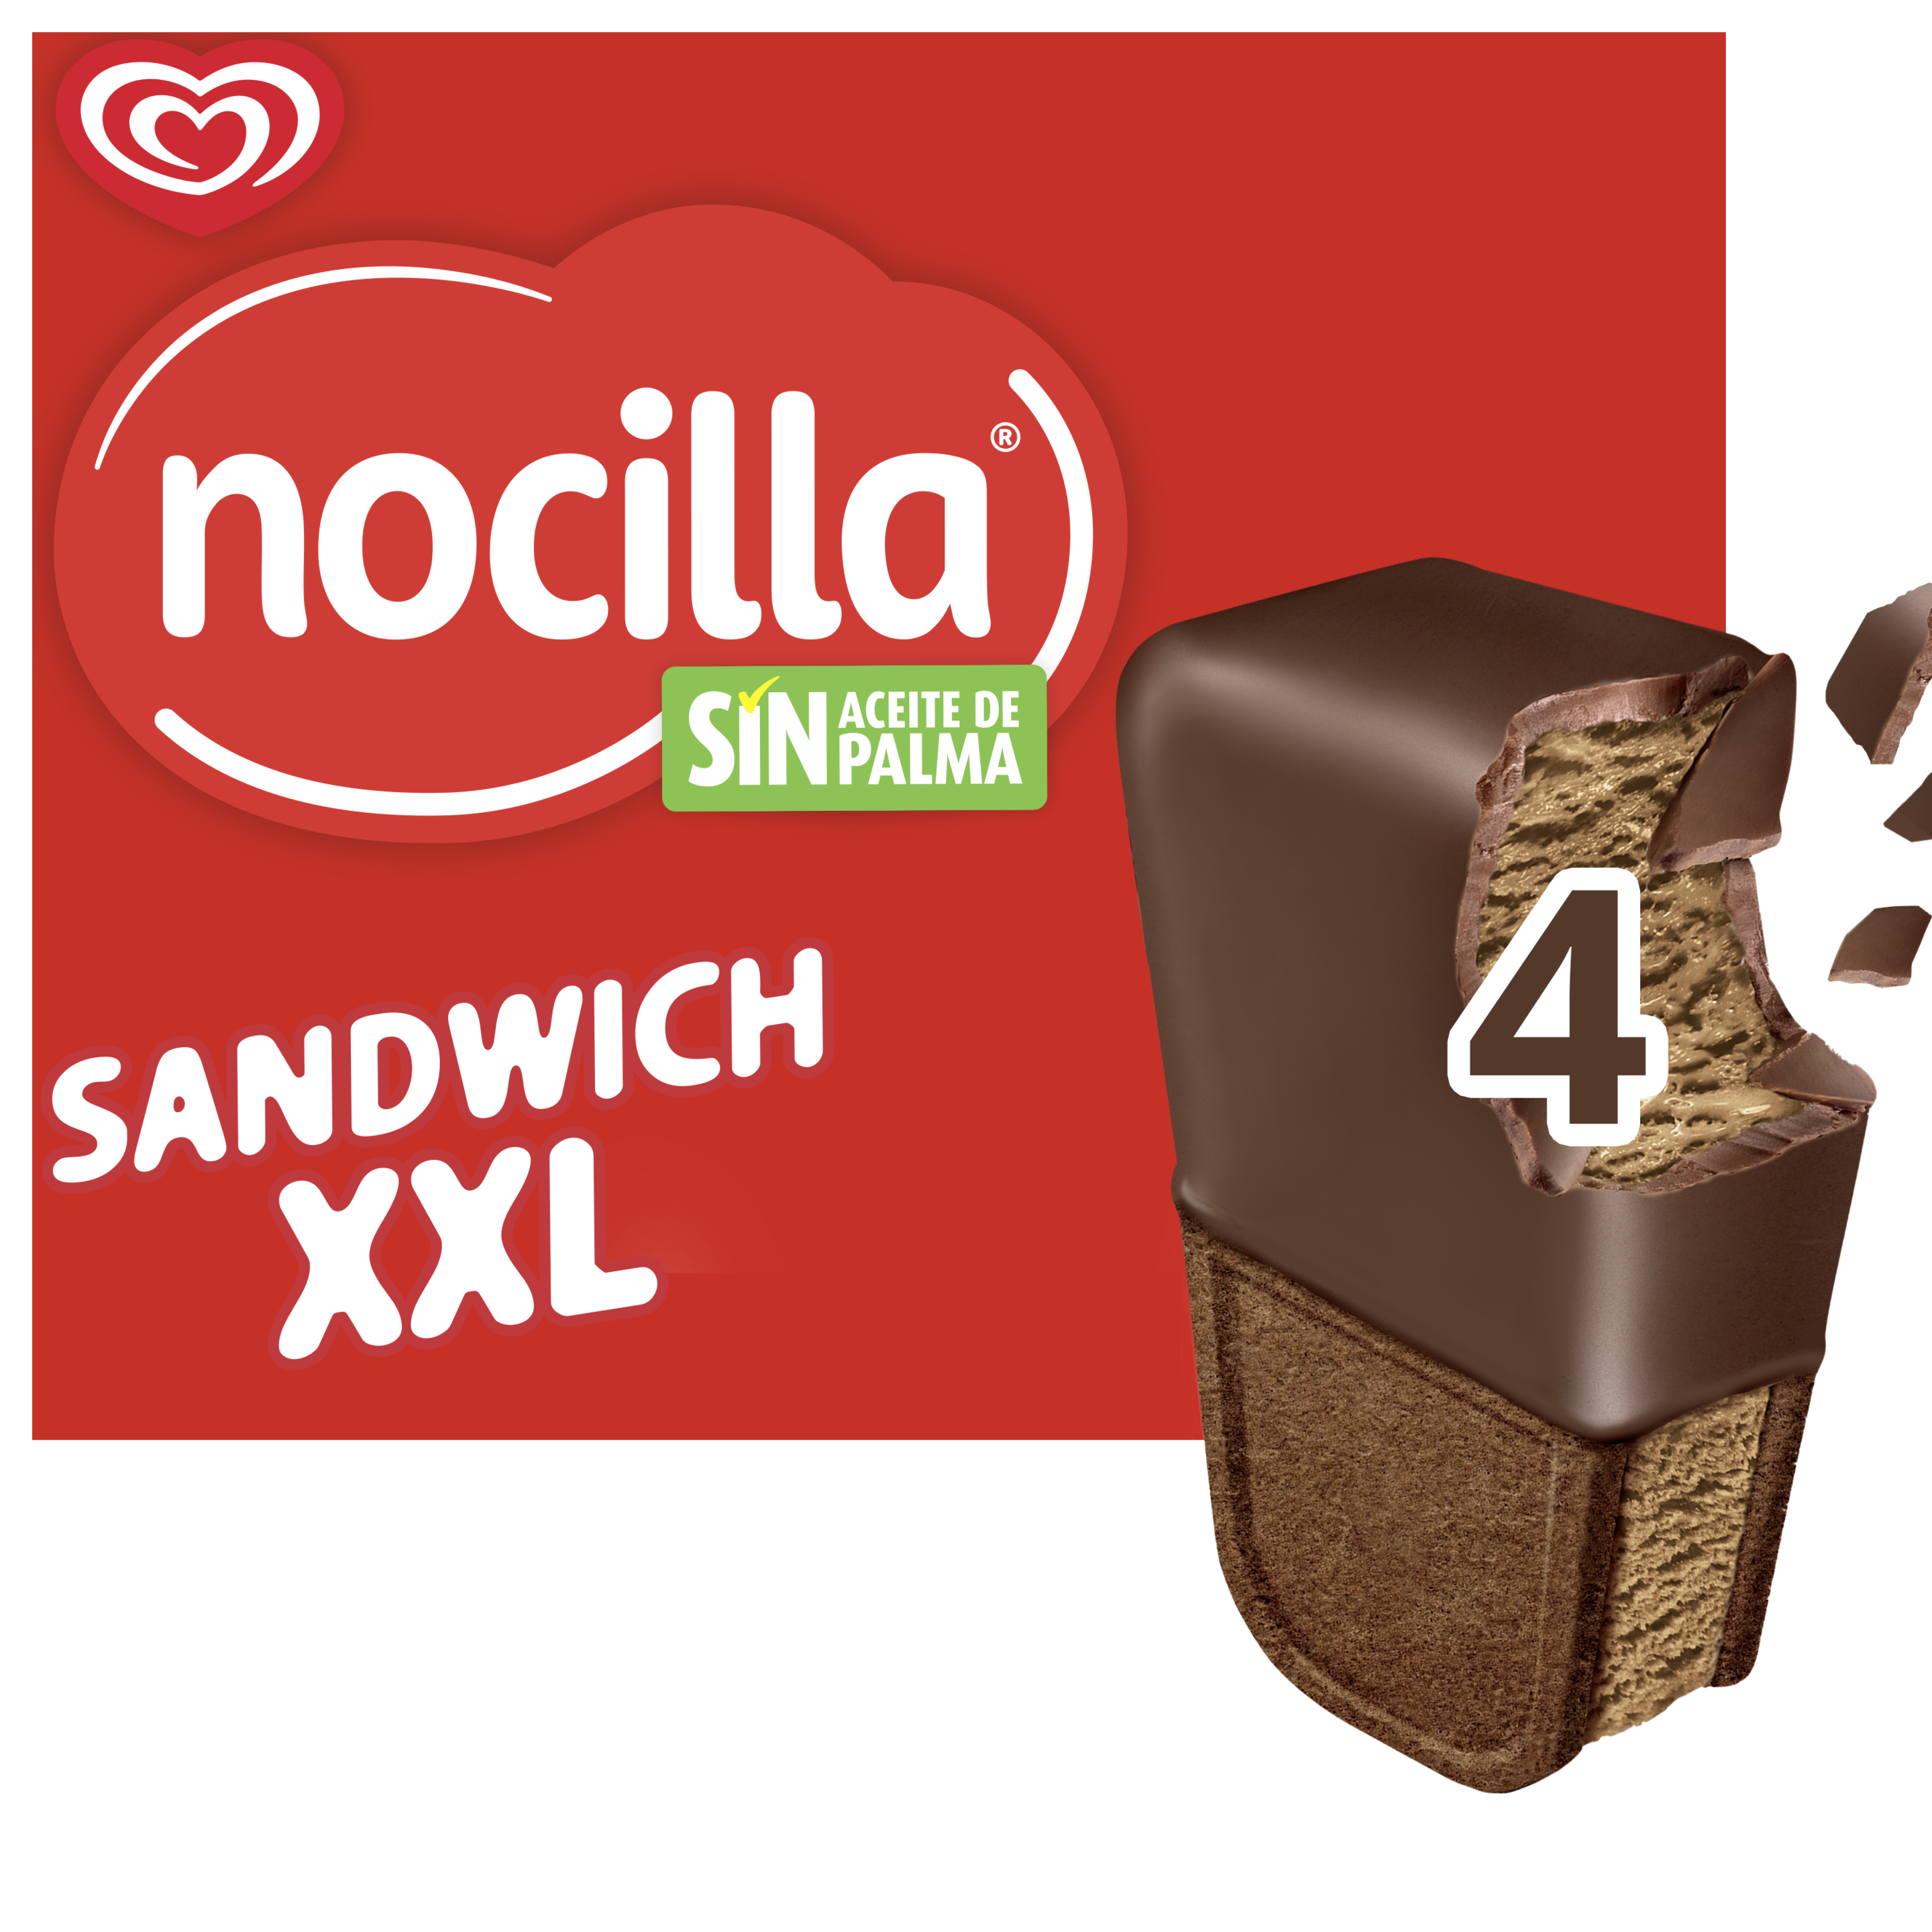 Multipack Nocilla Sandwich XXL